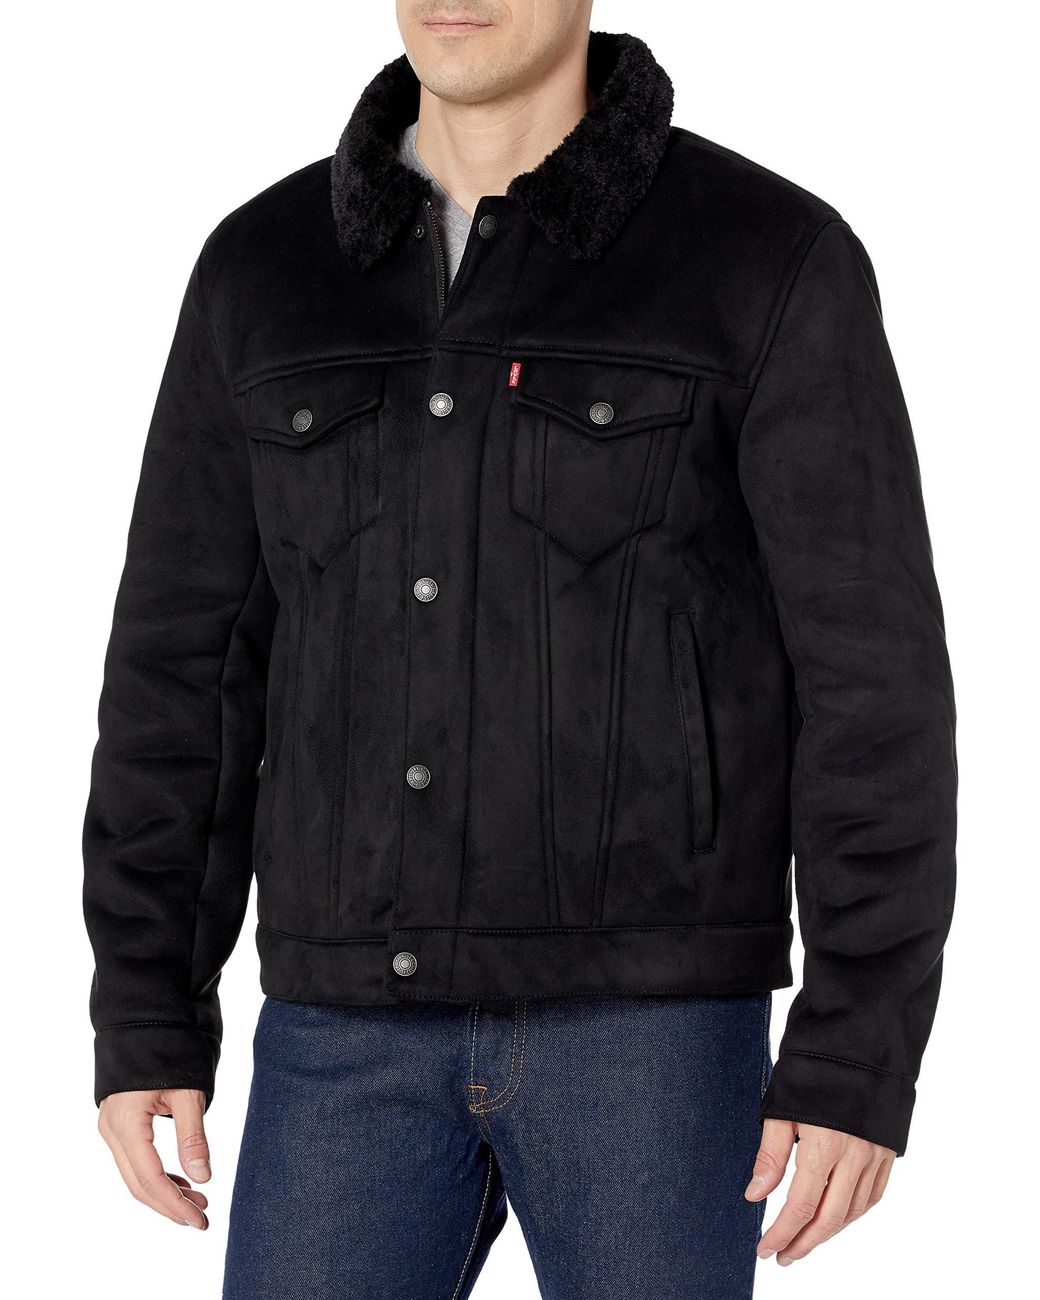 Levi's Faux Leather Sherpa Lined Trucker Jacket in Black for Men - Lyst